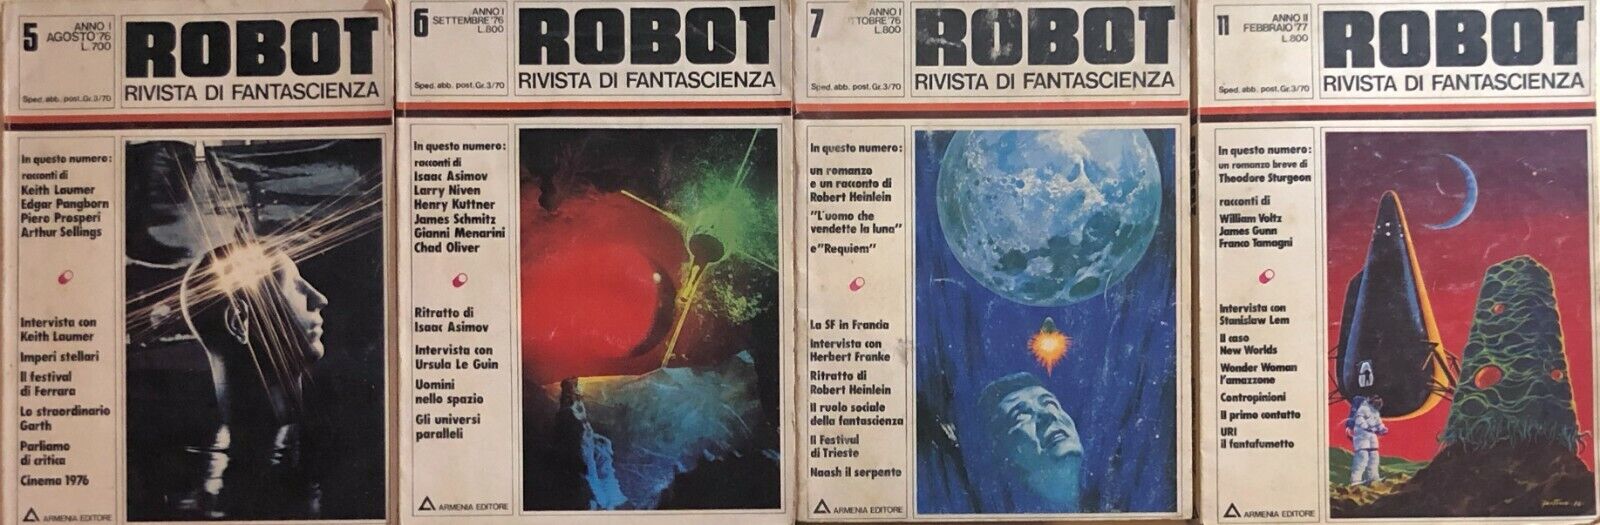 Robot rivista di fantascienza nr.5-6-7-11  di Aa.vv., 1970, Armenia Editore